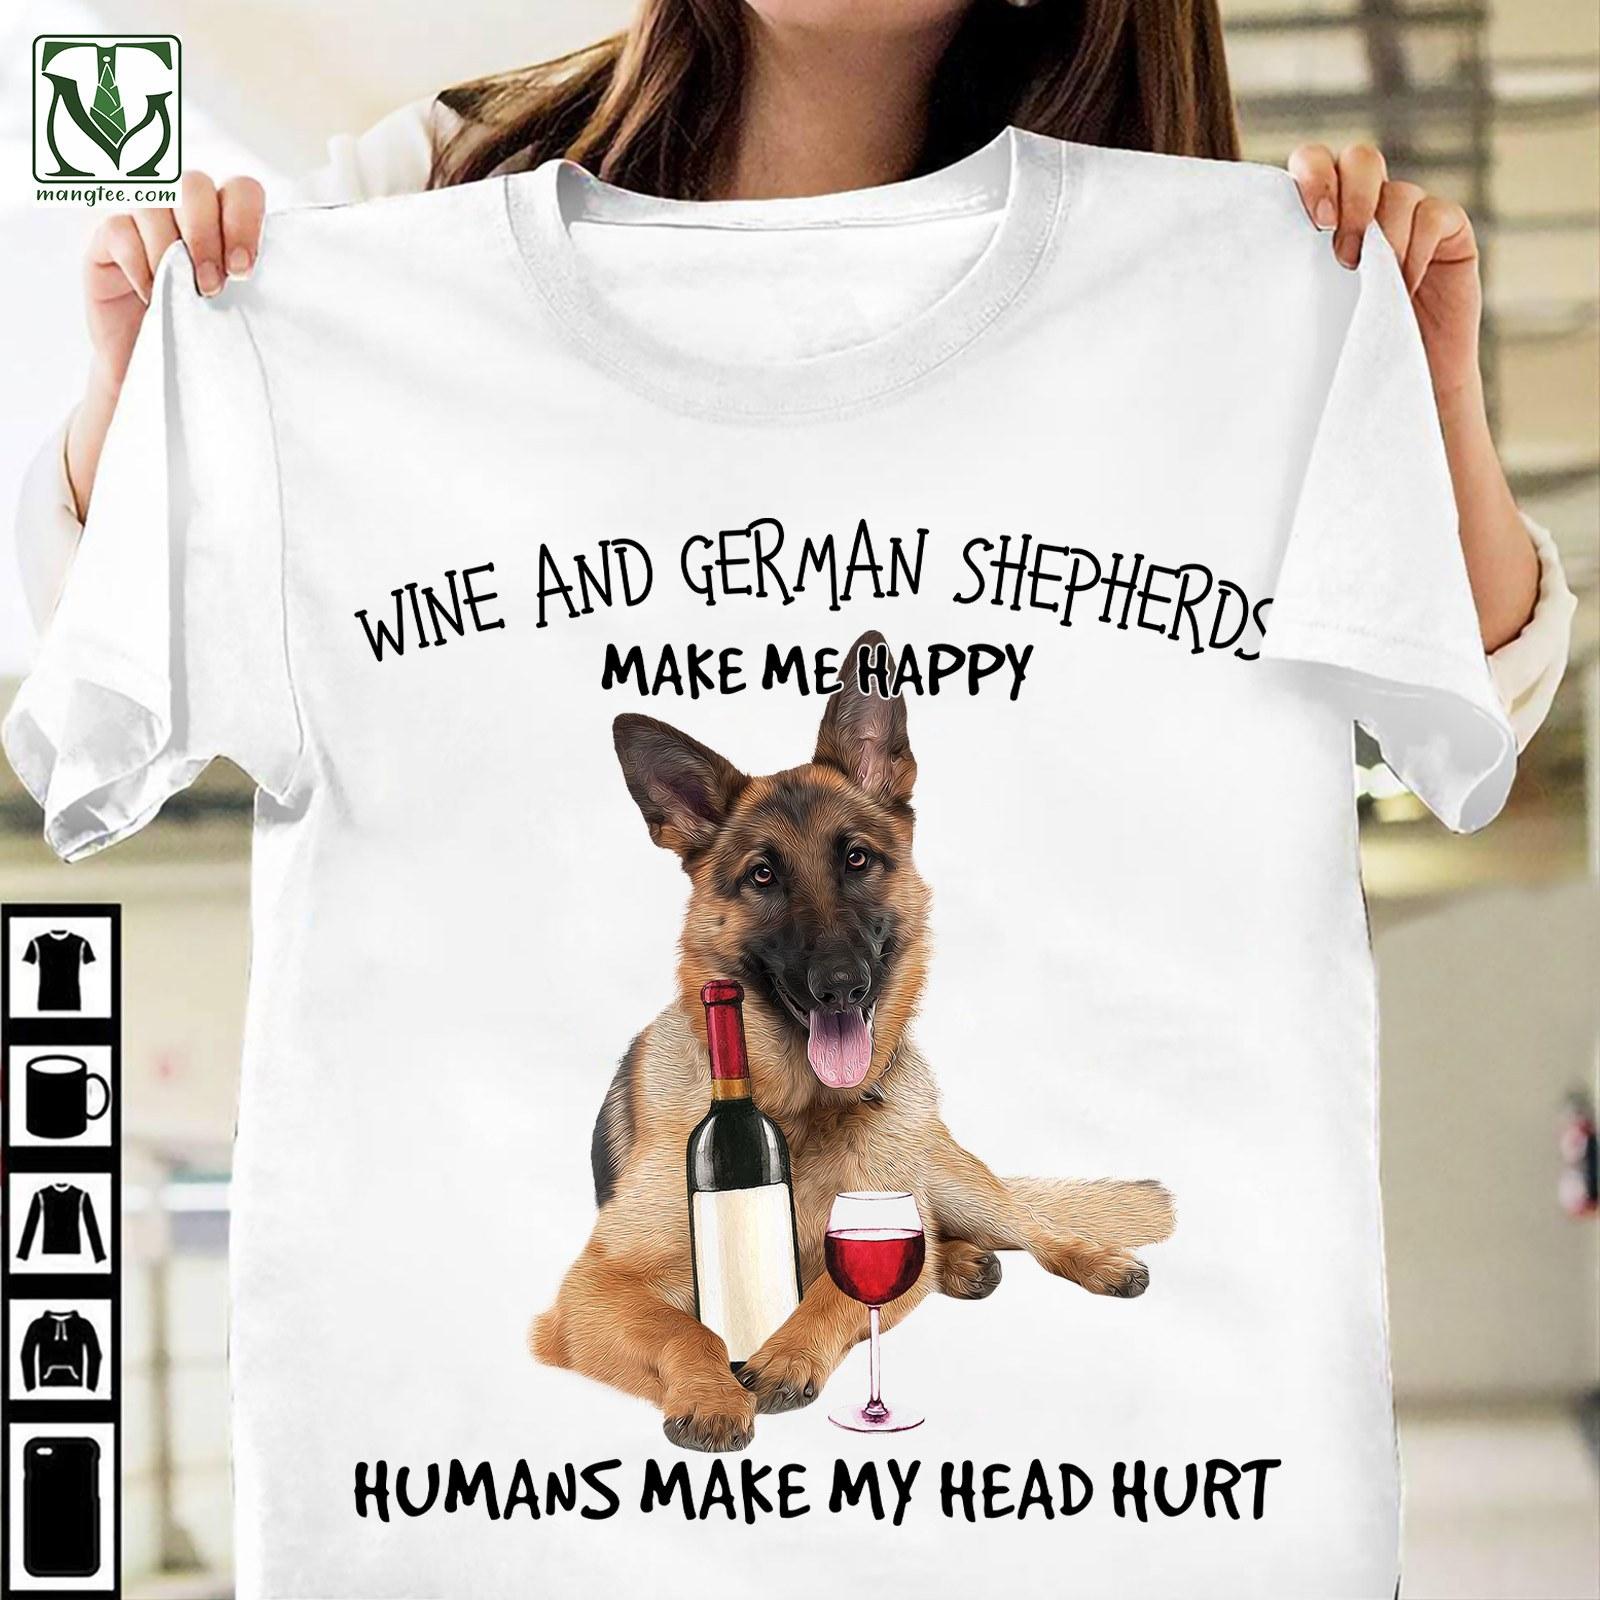 Wine and german shepherds make me happy, humans make my head hurt - Wine and dog, German shepherds dog lover